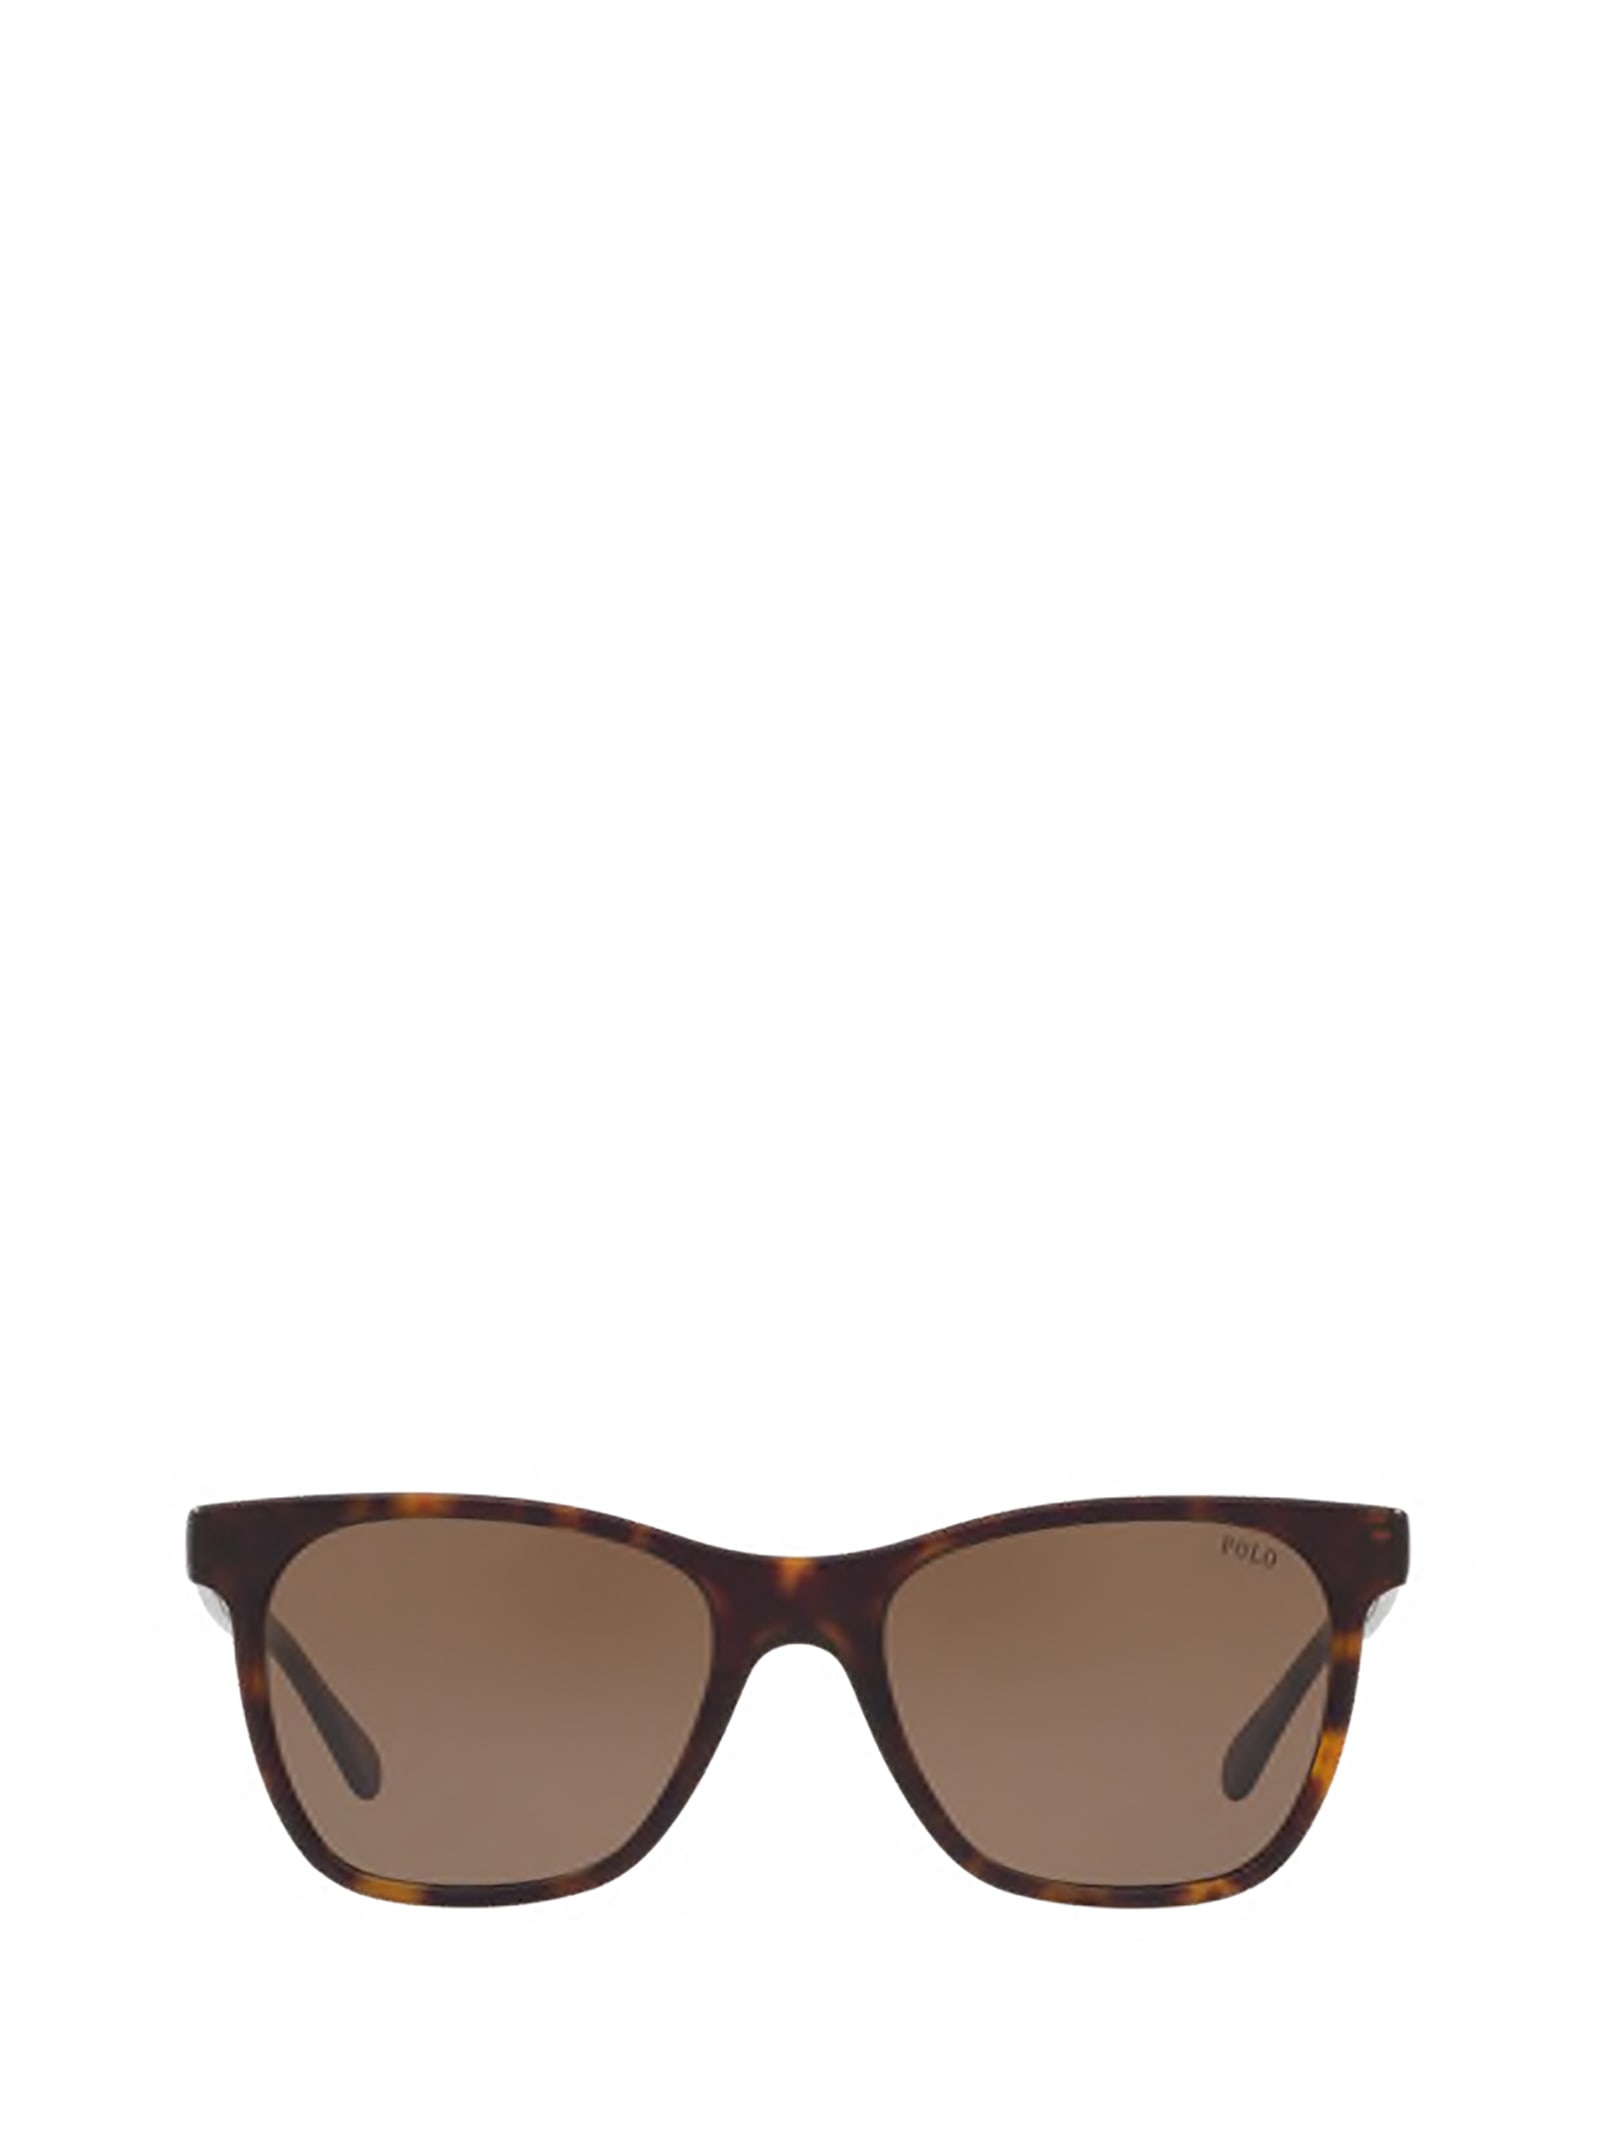 Polo Ralph Lauren Ph4128 560273 Sunglasses